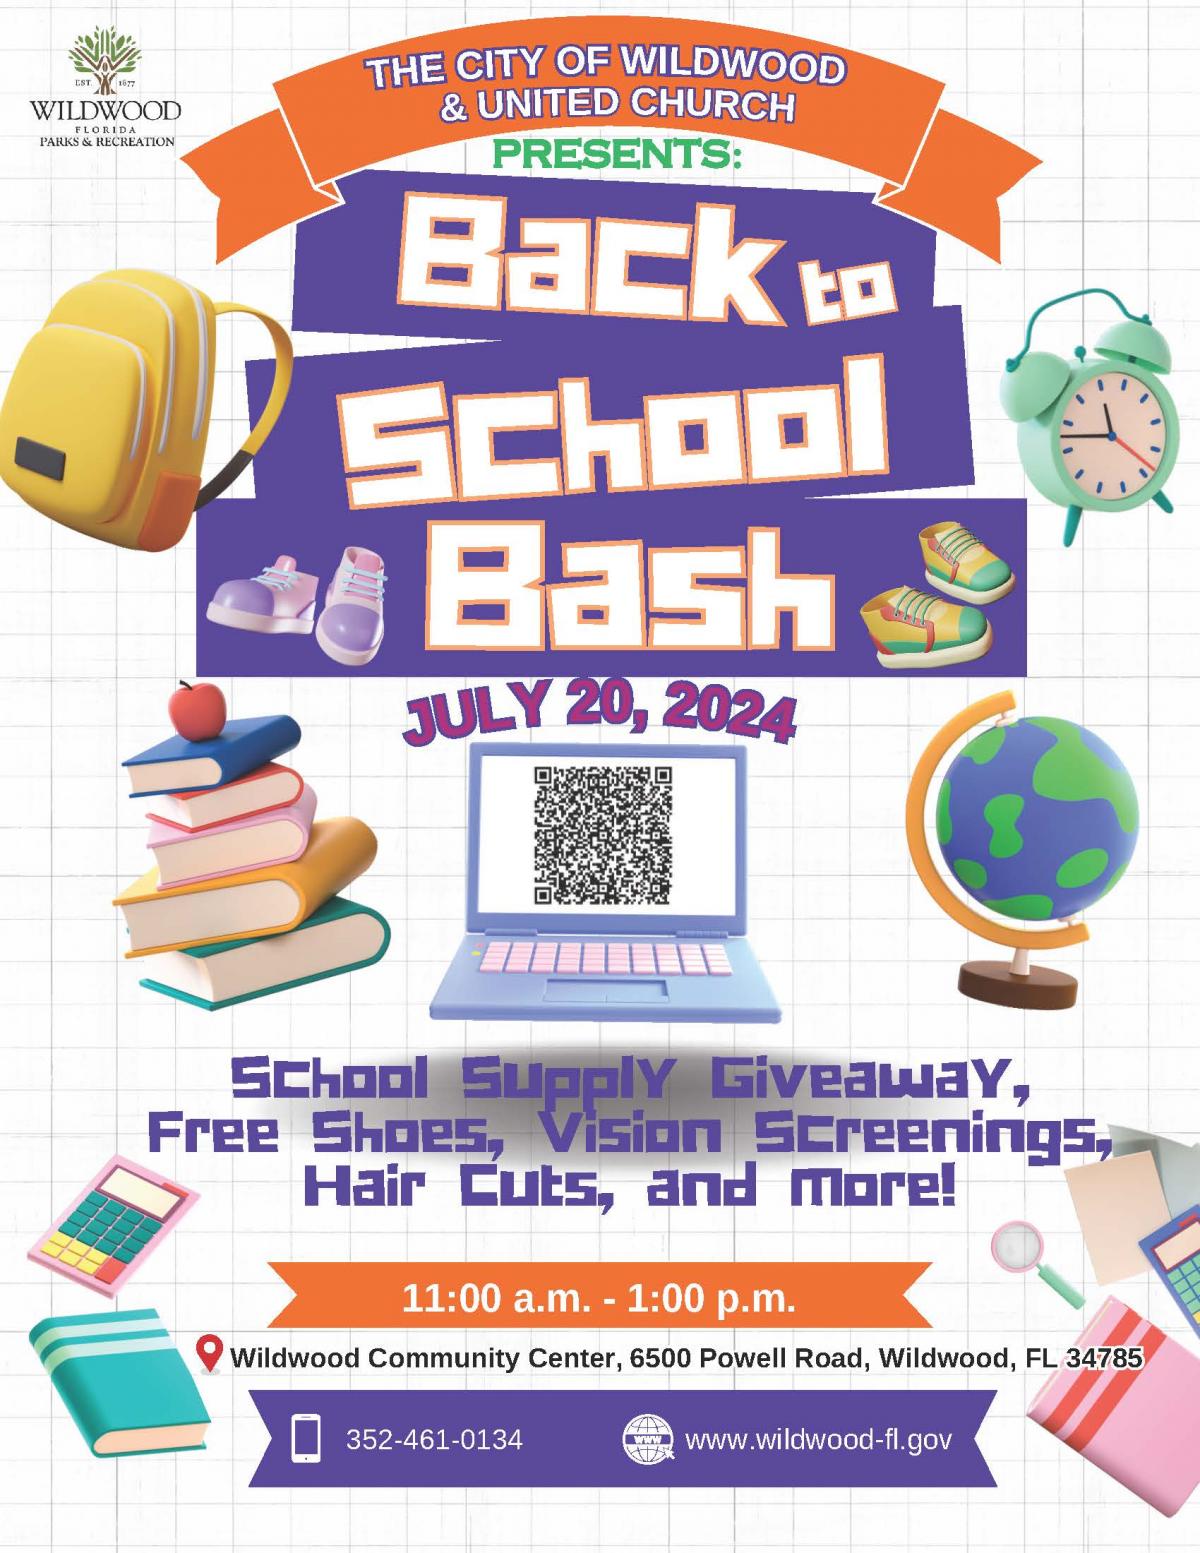  Back-to-School Bash, Wildwood Community Center, 6500 Powell Road, Wildwood, Fl 34785, 11:00 a.m. - 1:00 p.m. 